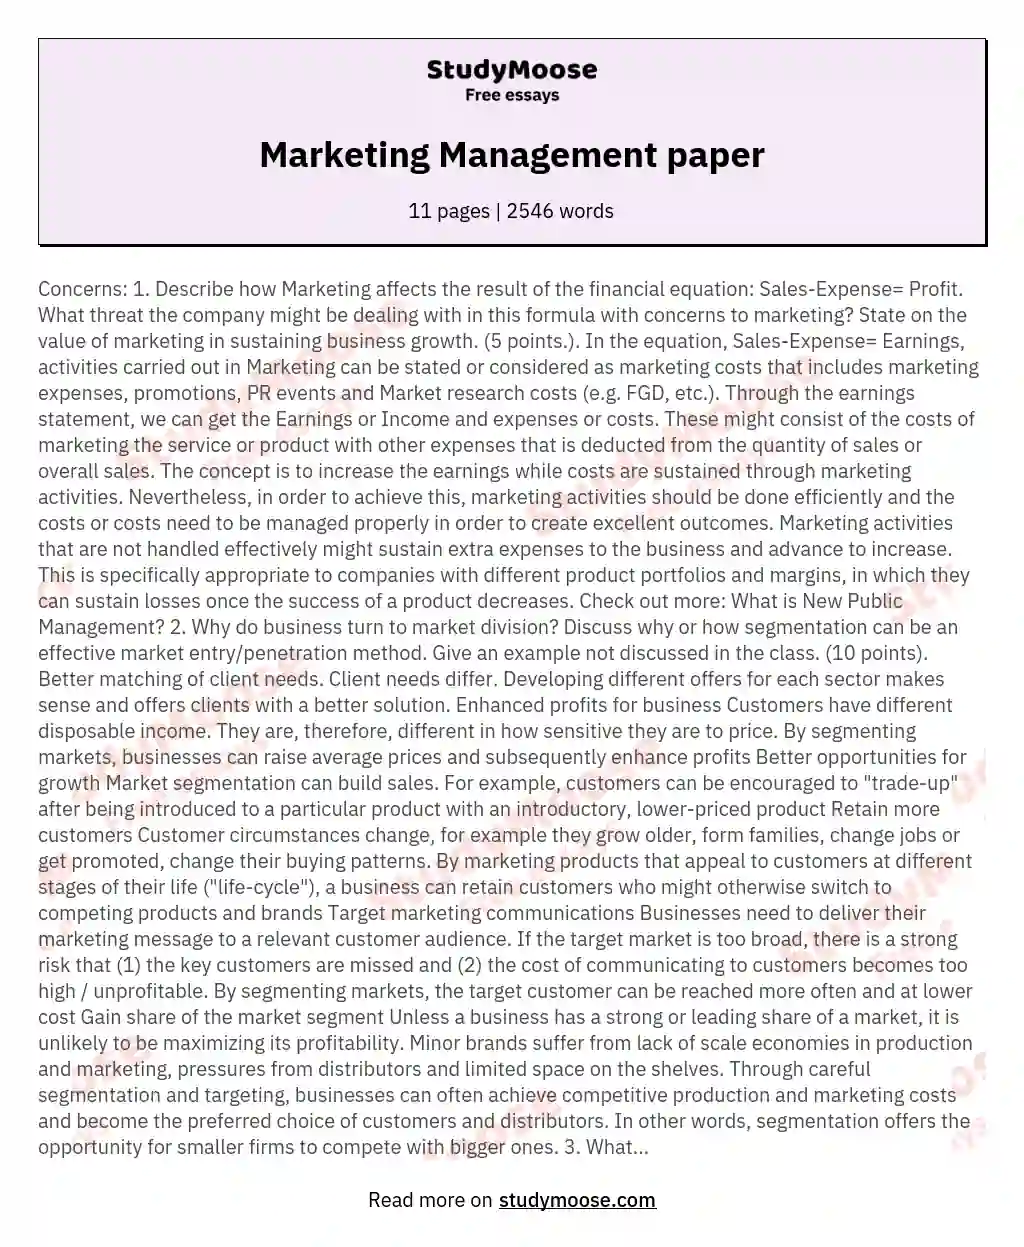 Marketing Management paper essay